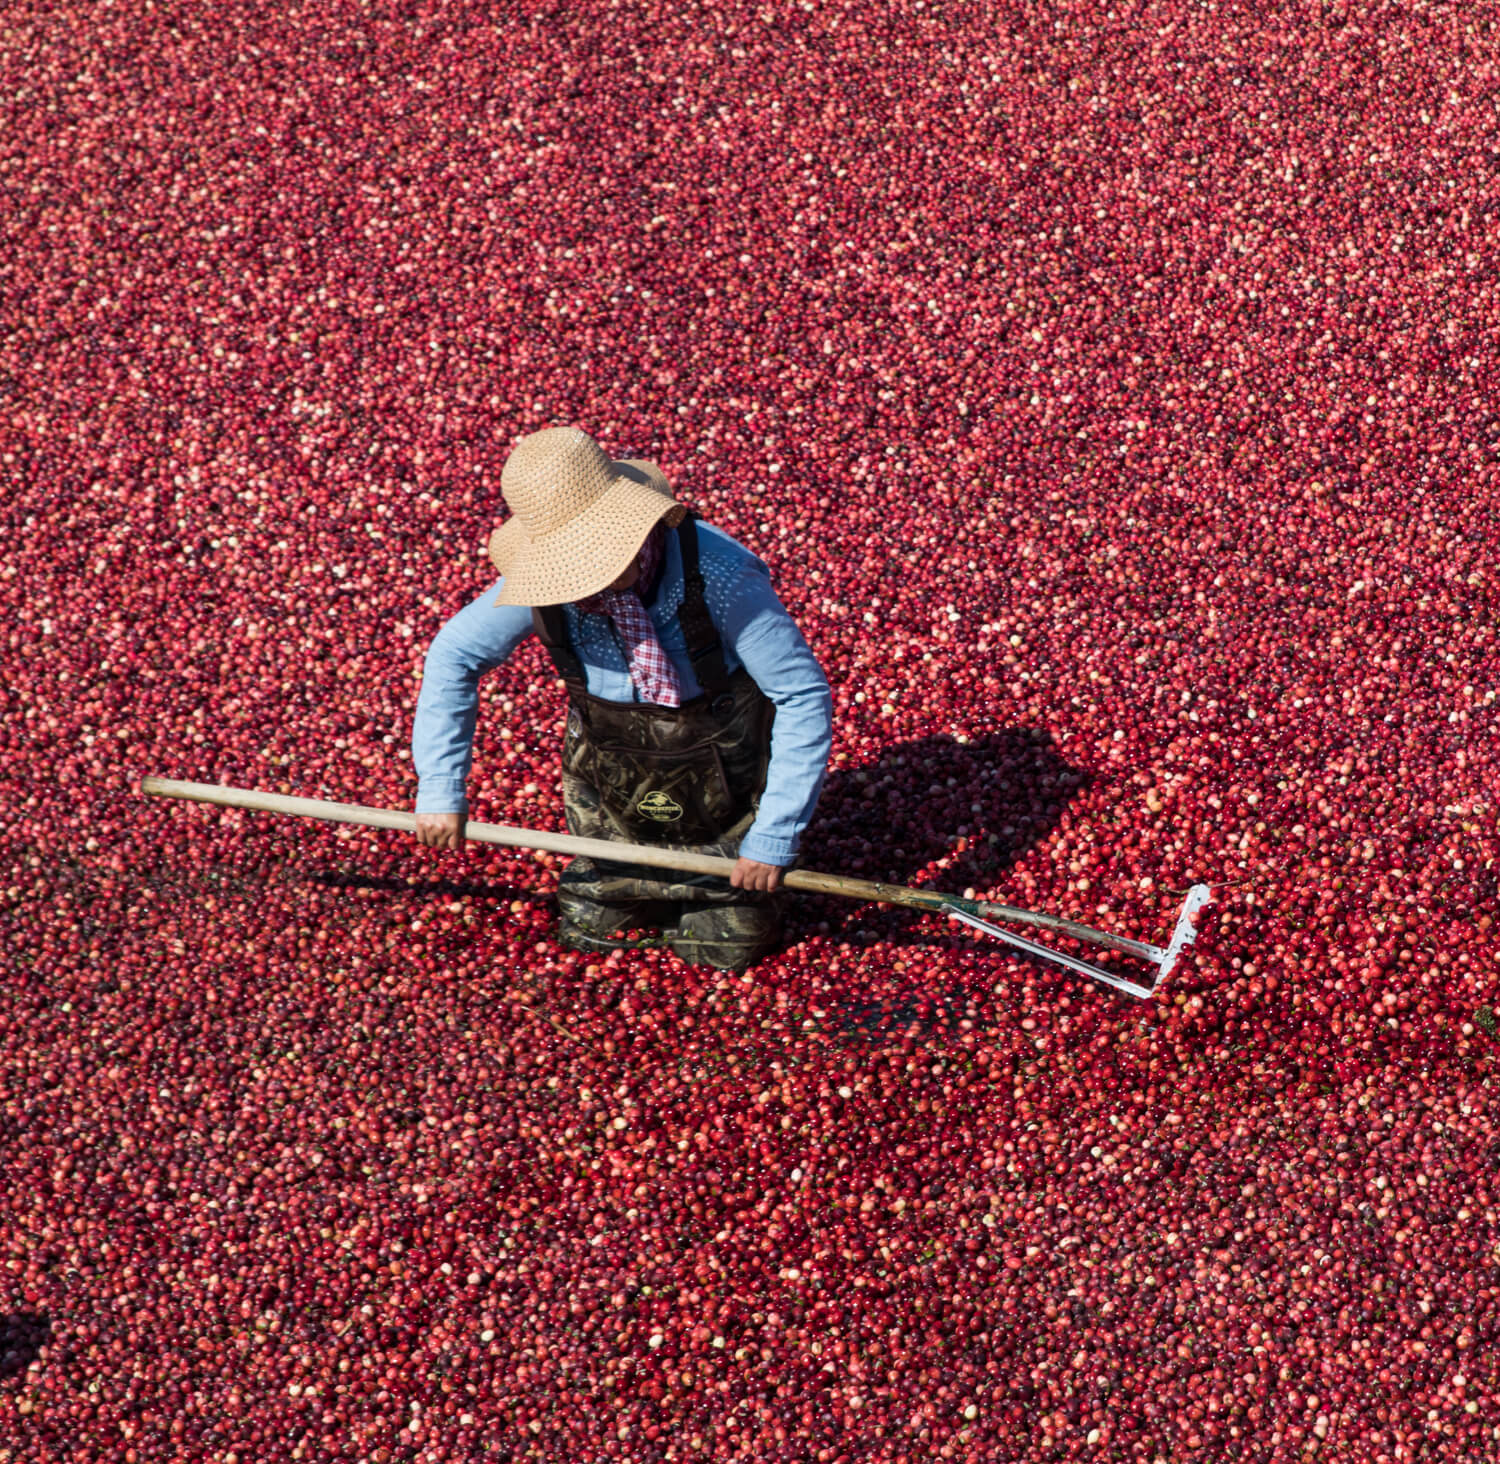 Cranberry Farming